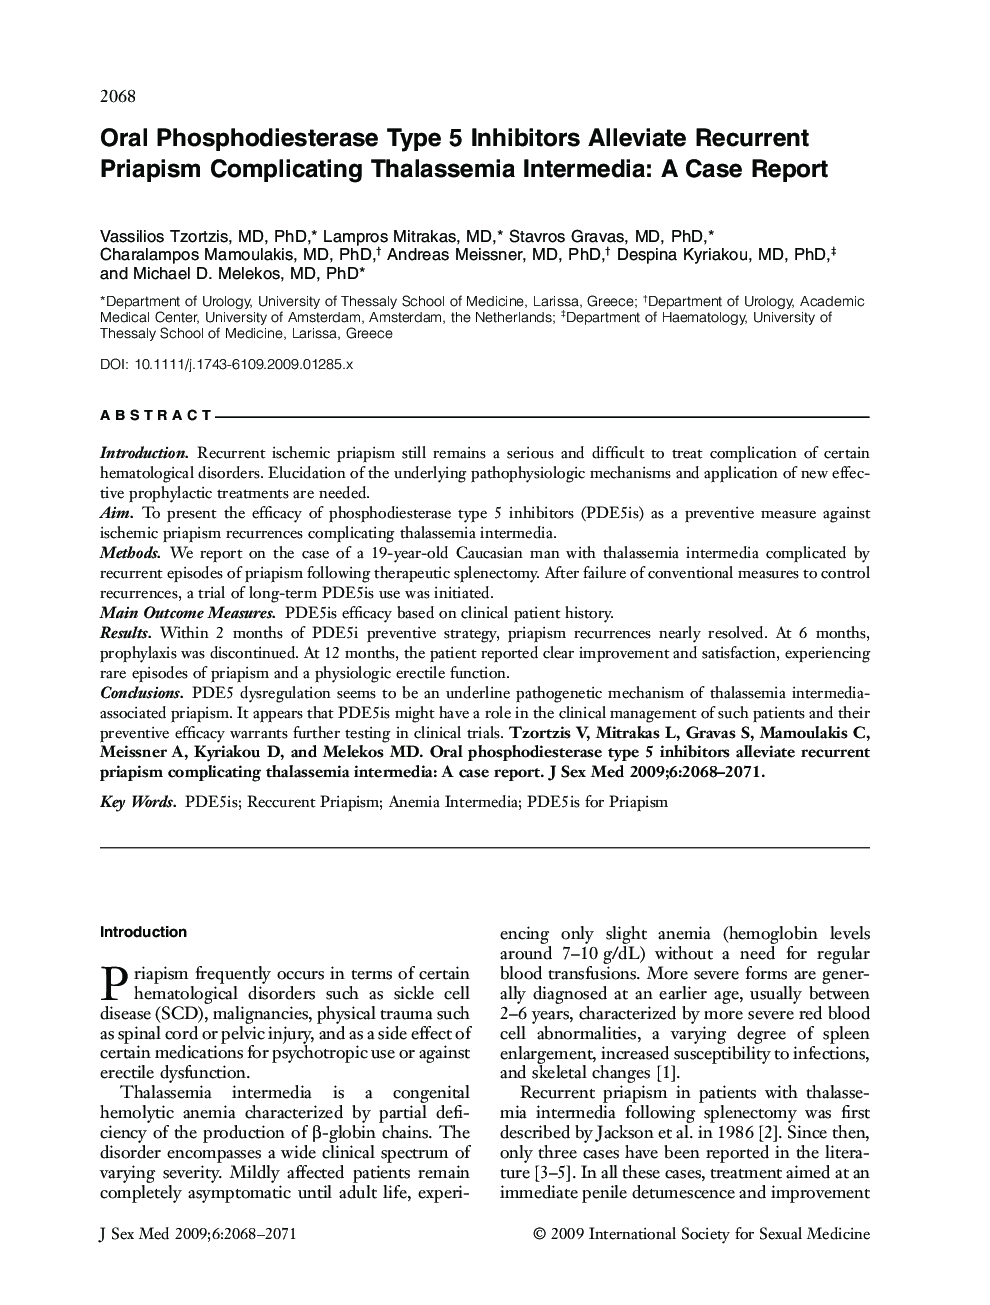 Oral Phosphodiesterase Type 5 Inhibitors Alleviate Recurrent Priapism Complicating Thalassemia Intermedia: A Case Report